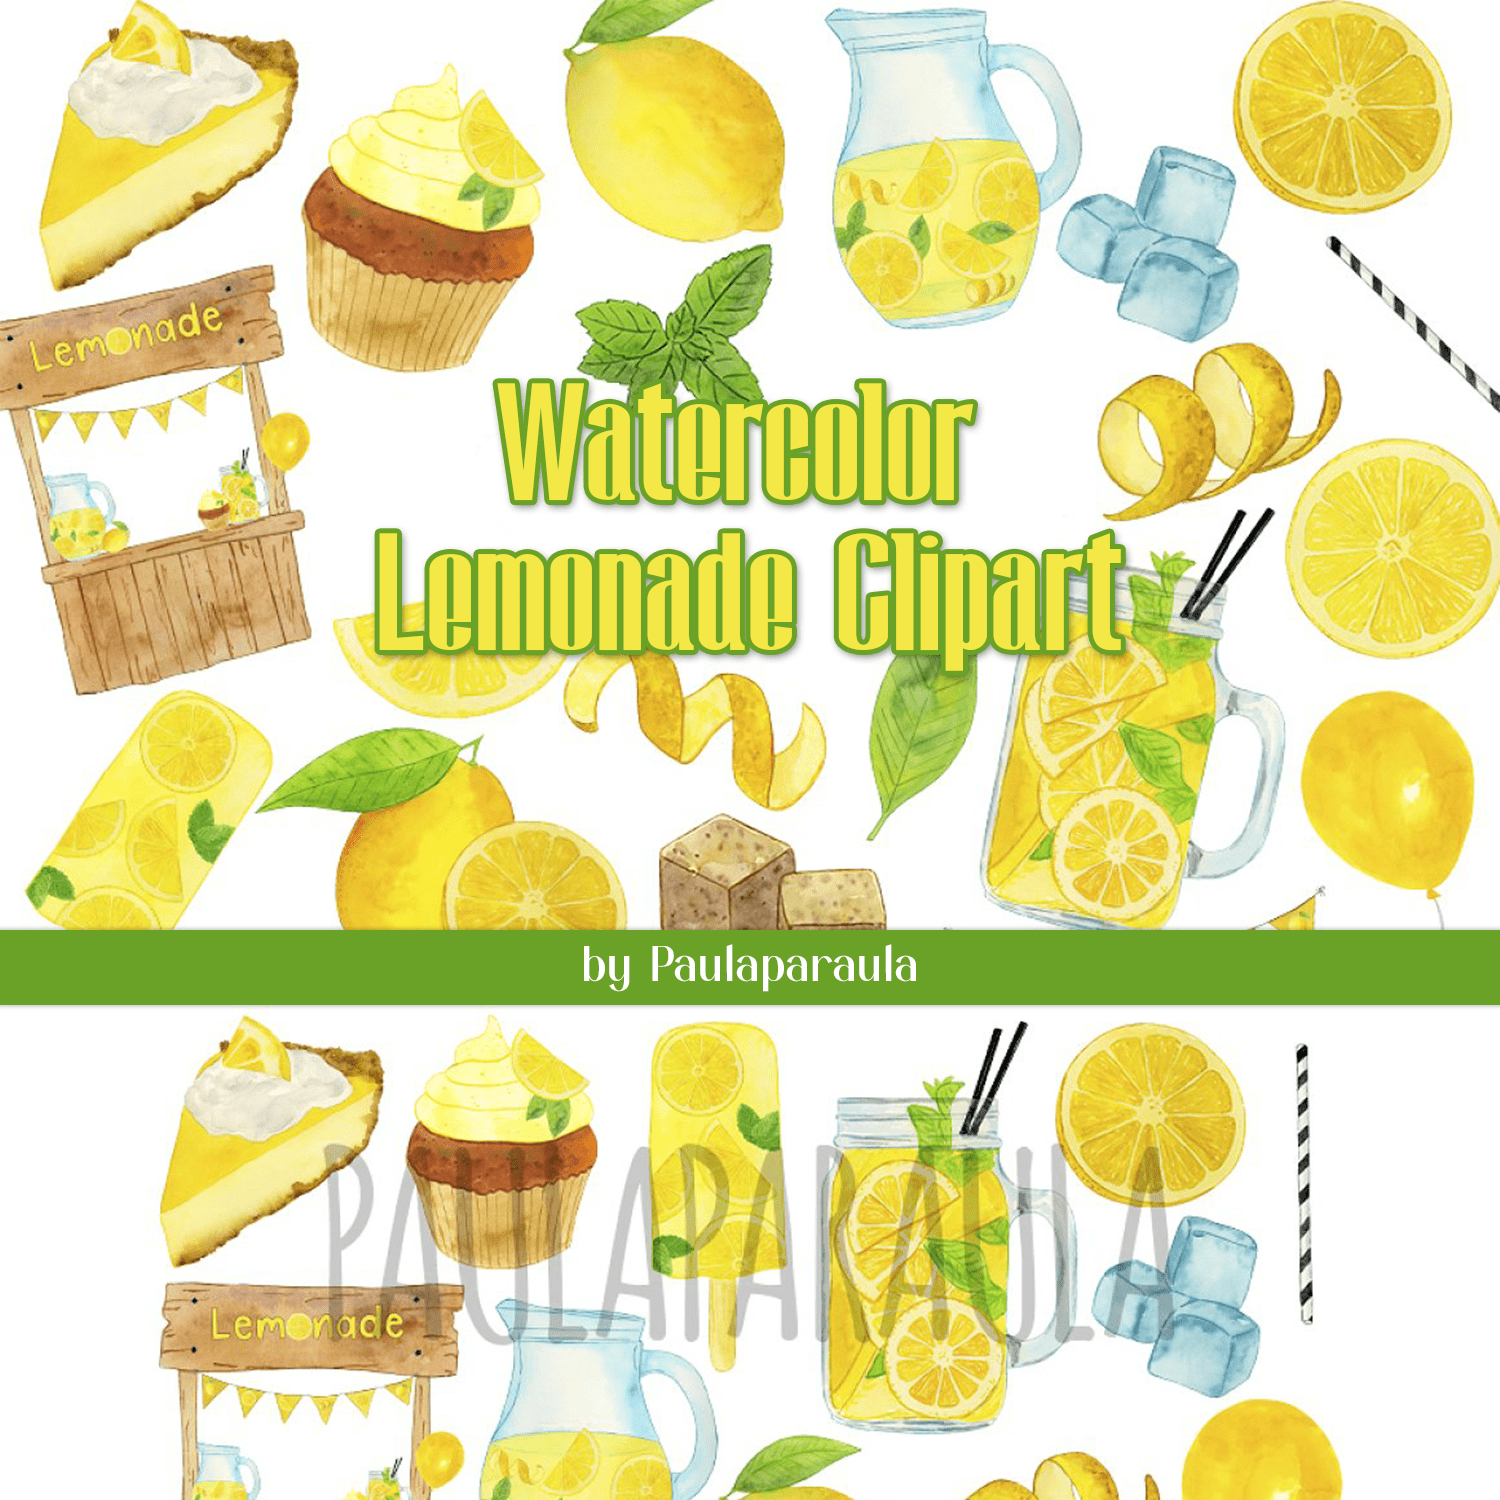 Watercolor Lemonade Clipart, Summer cover.